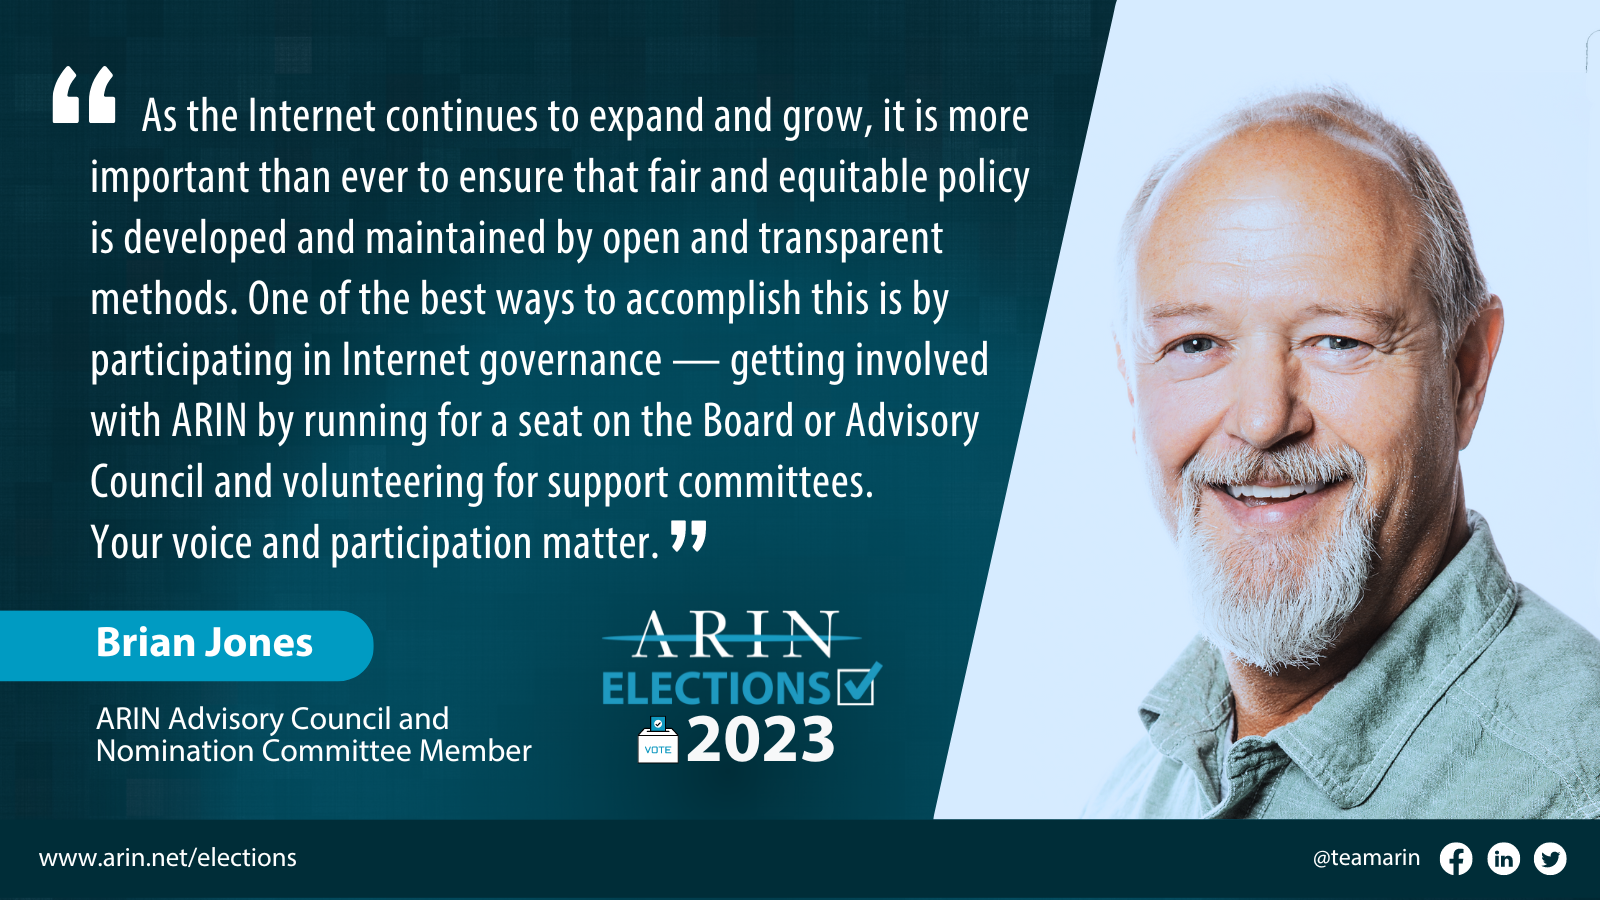 ARIN Advisory Council Member Brian Jones’ quote and headshot